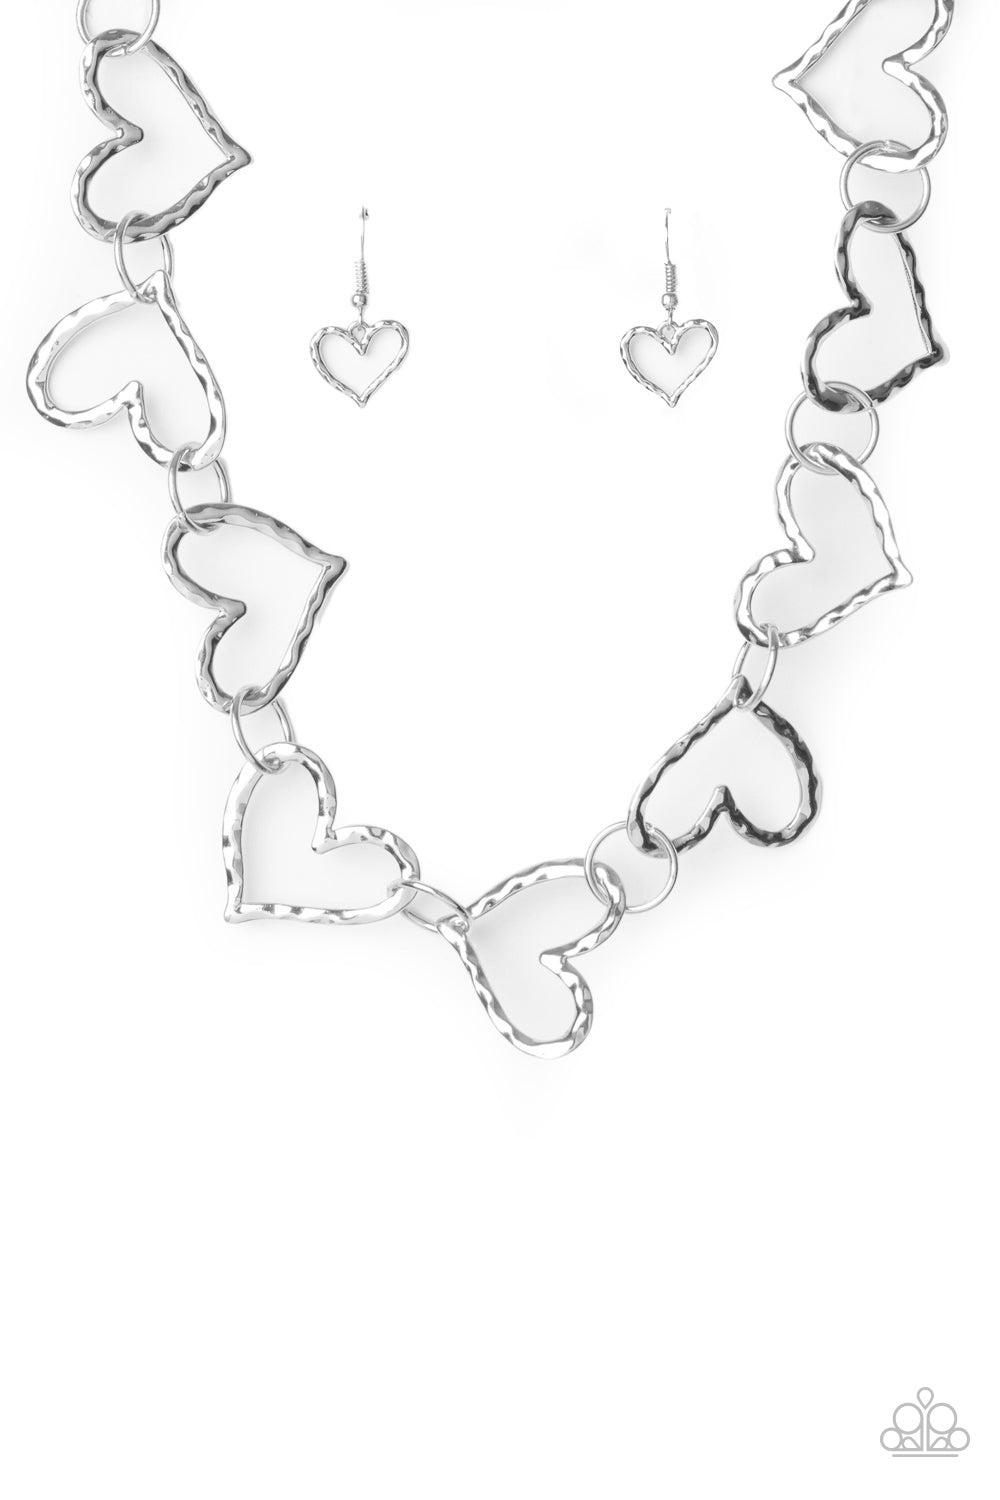 Vintagely Valentine Silver
Necklace - Daria's Blings N Things